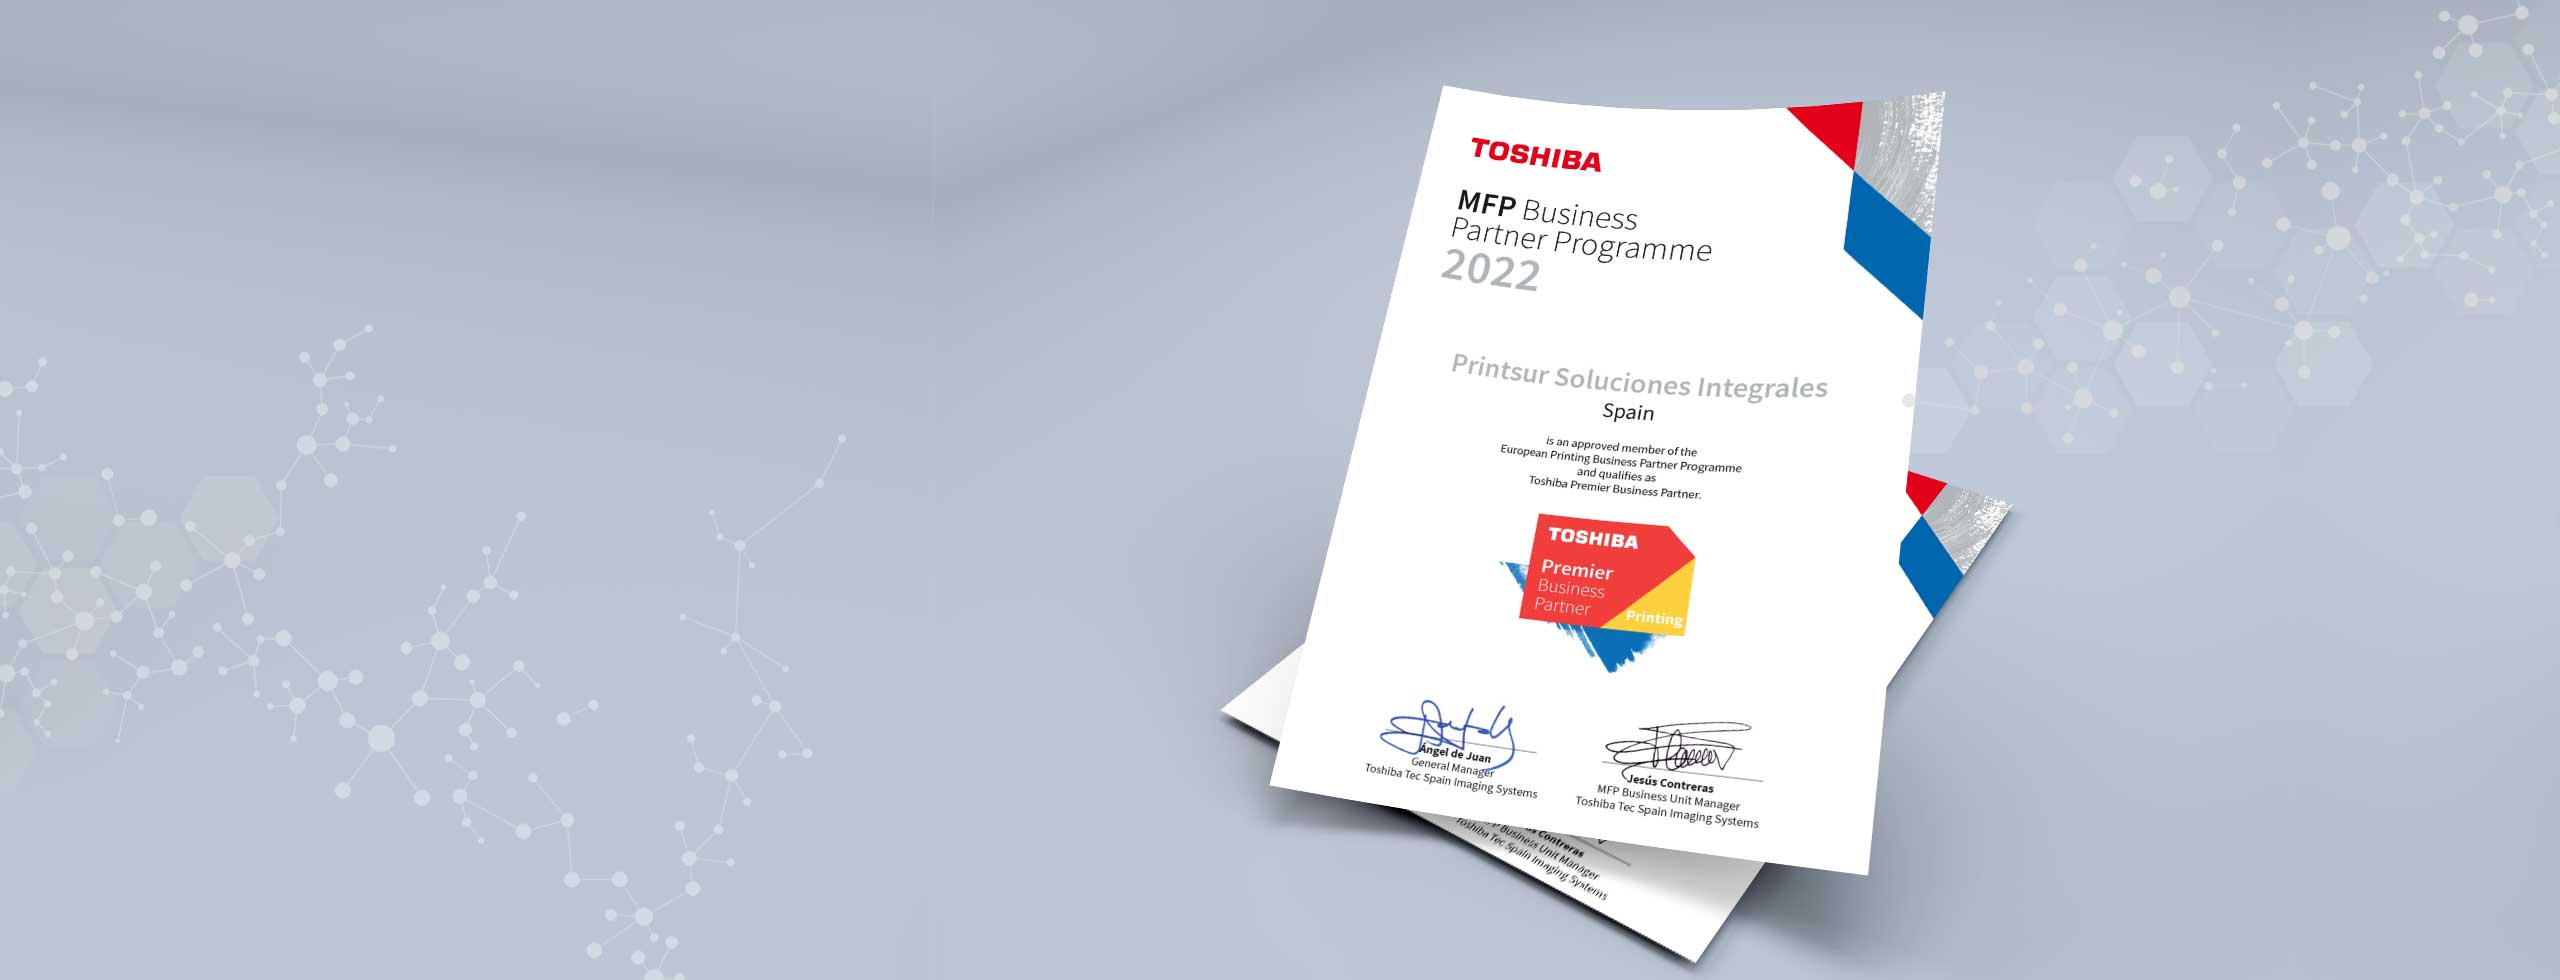 Certificado Toshiba Premier Business Partner_Printsur